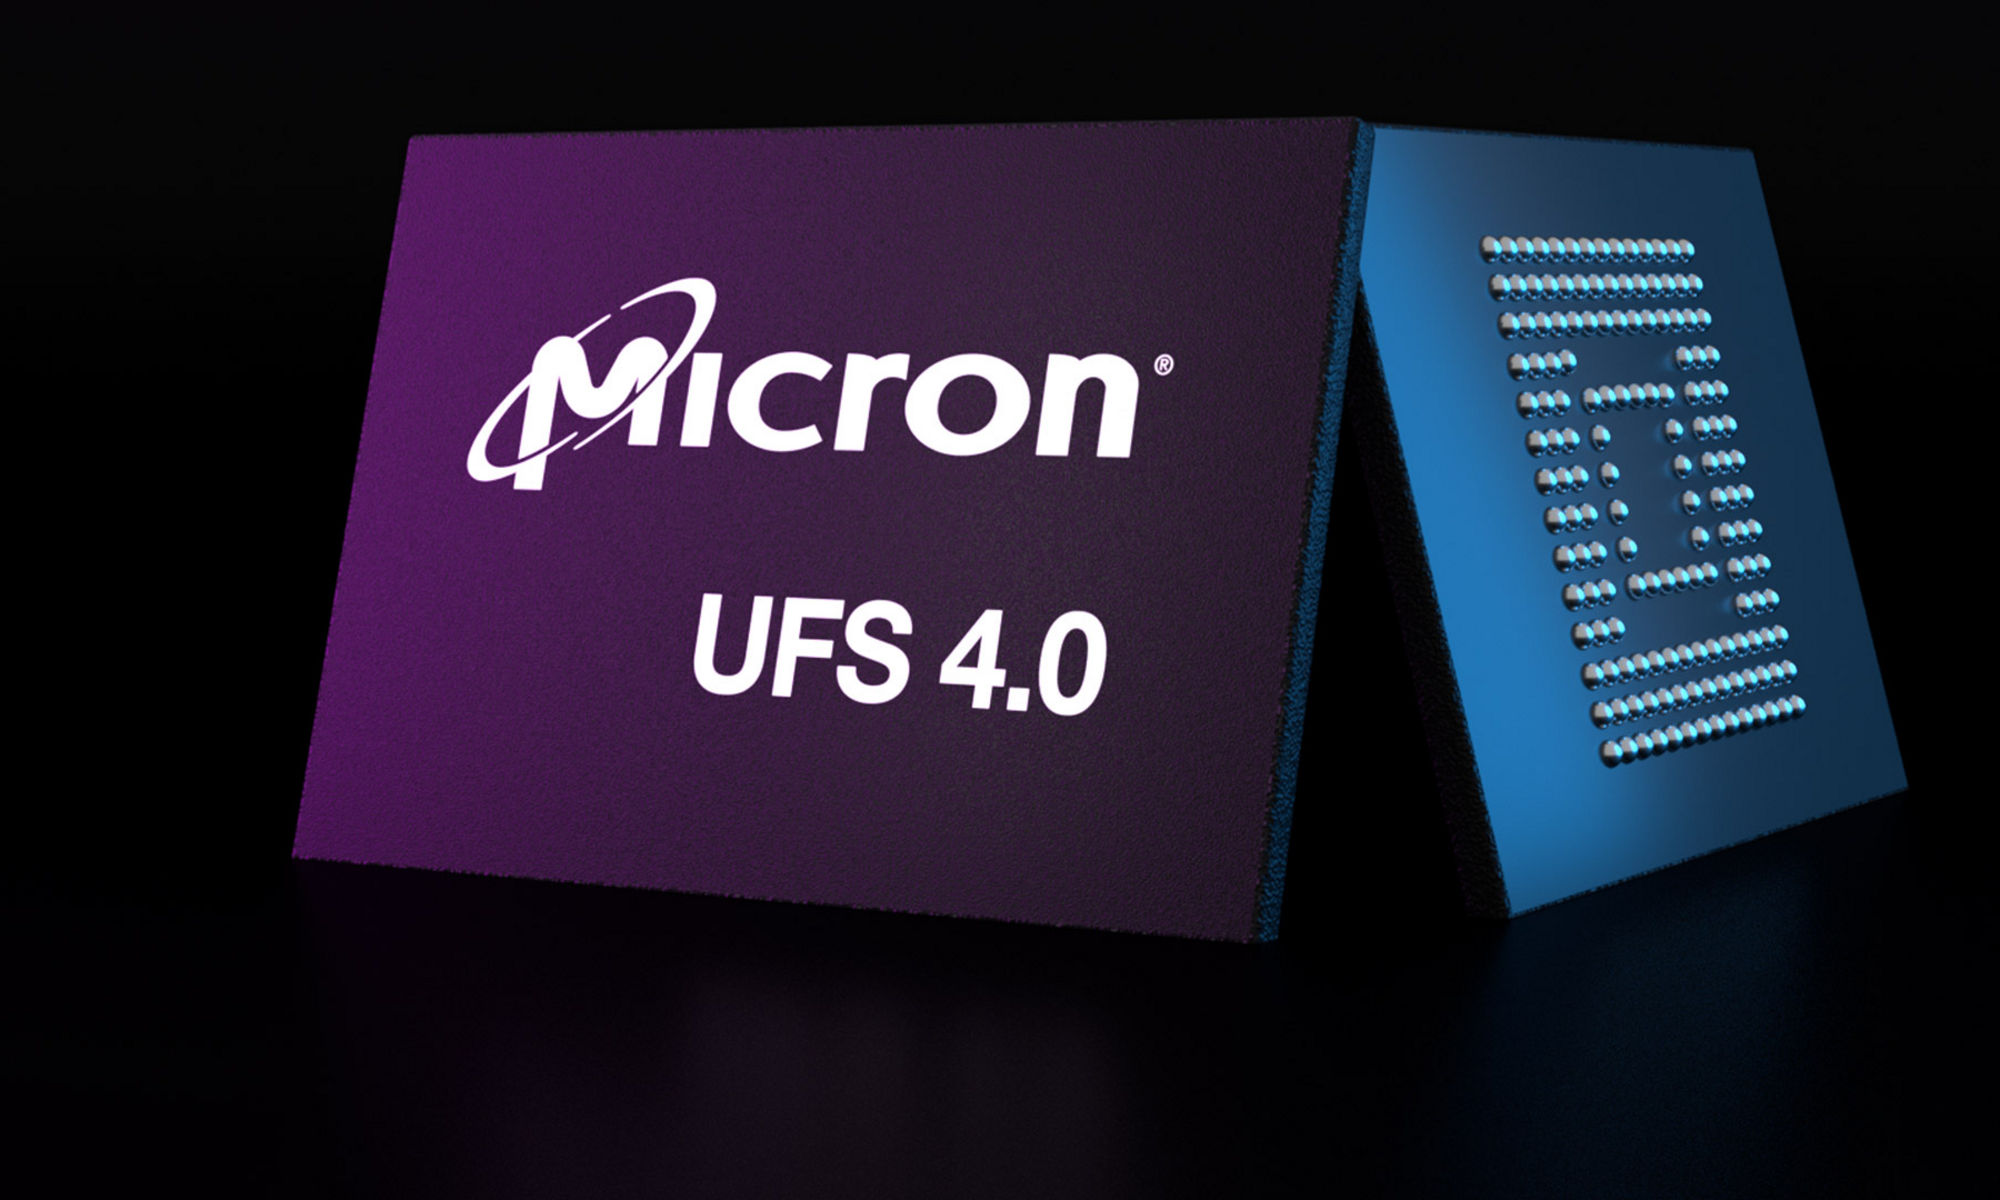 Micron UFS 4.0 device